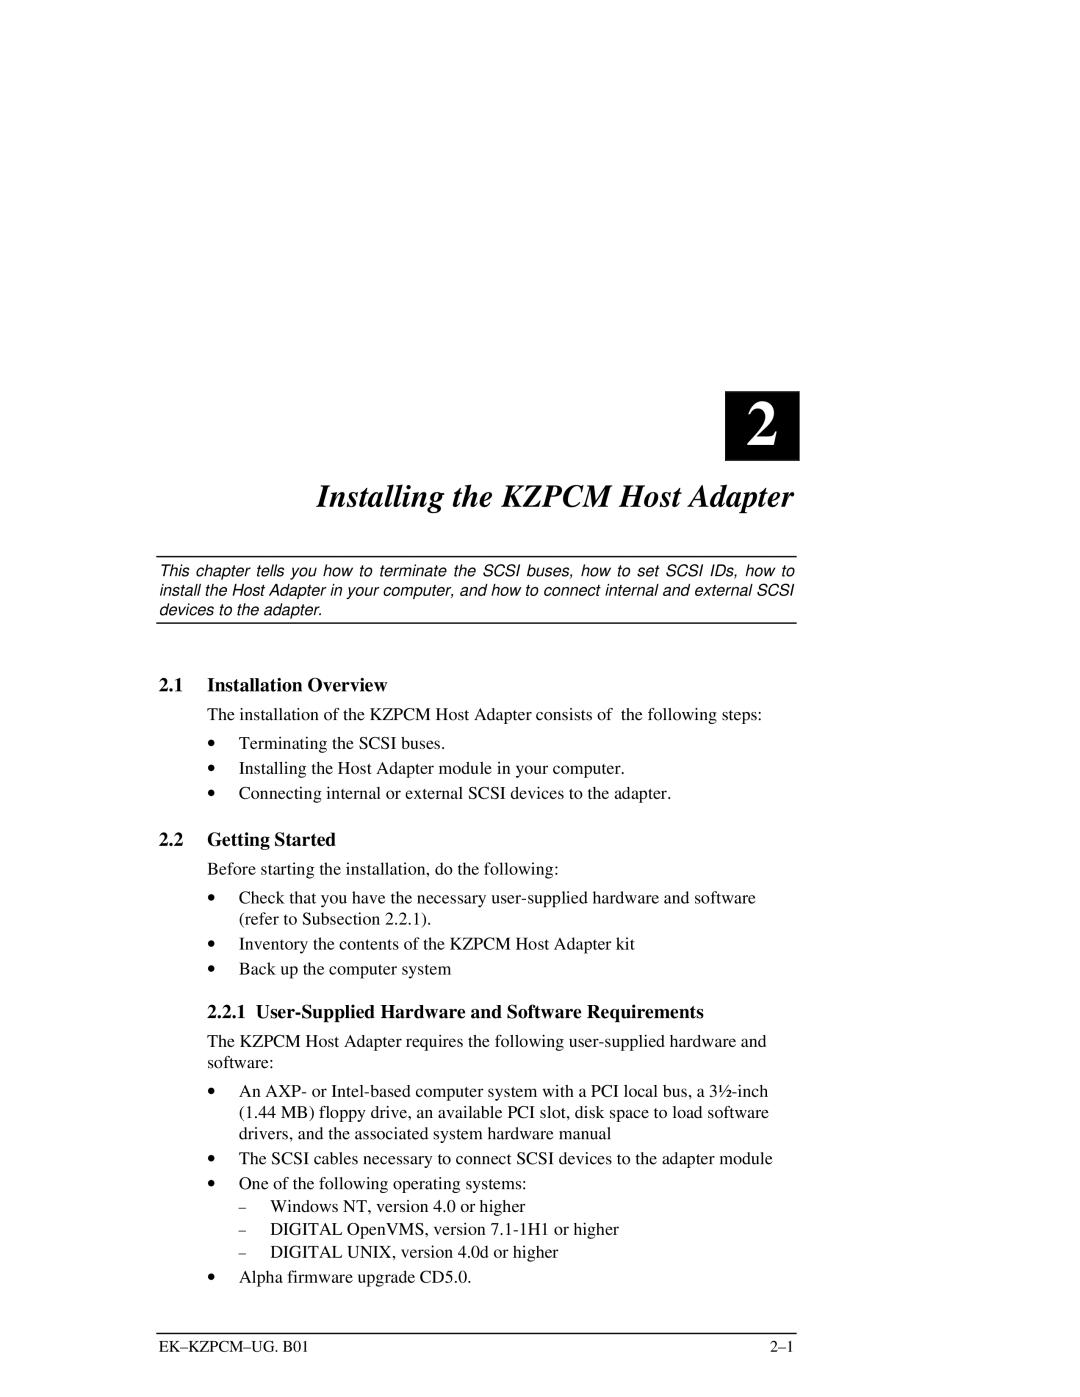 Intel EK-KZPCM-UG manual Installing the KZPCM Host Adapter, Installation Overview, Getting Started 